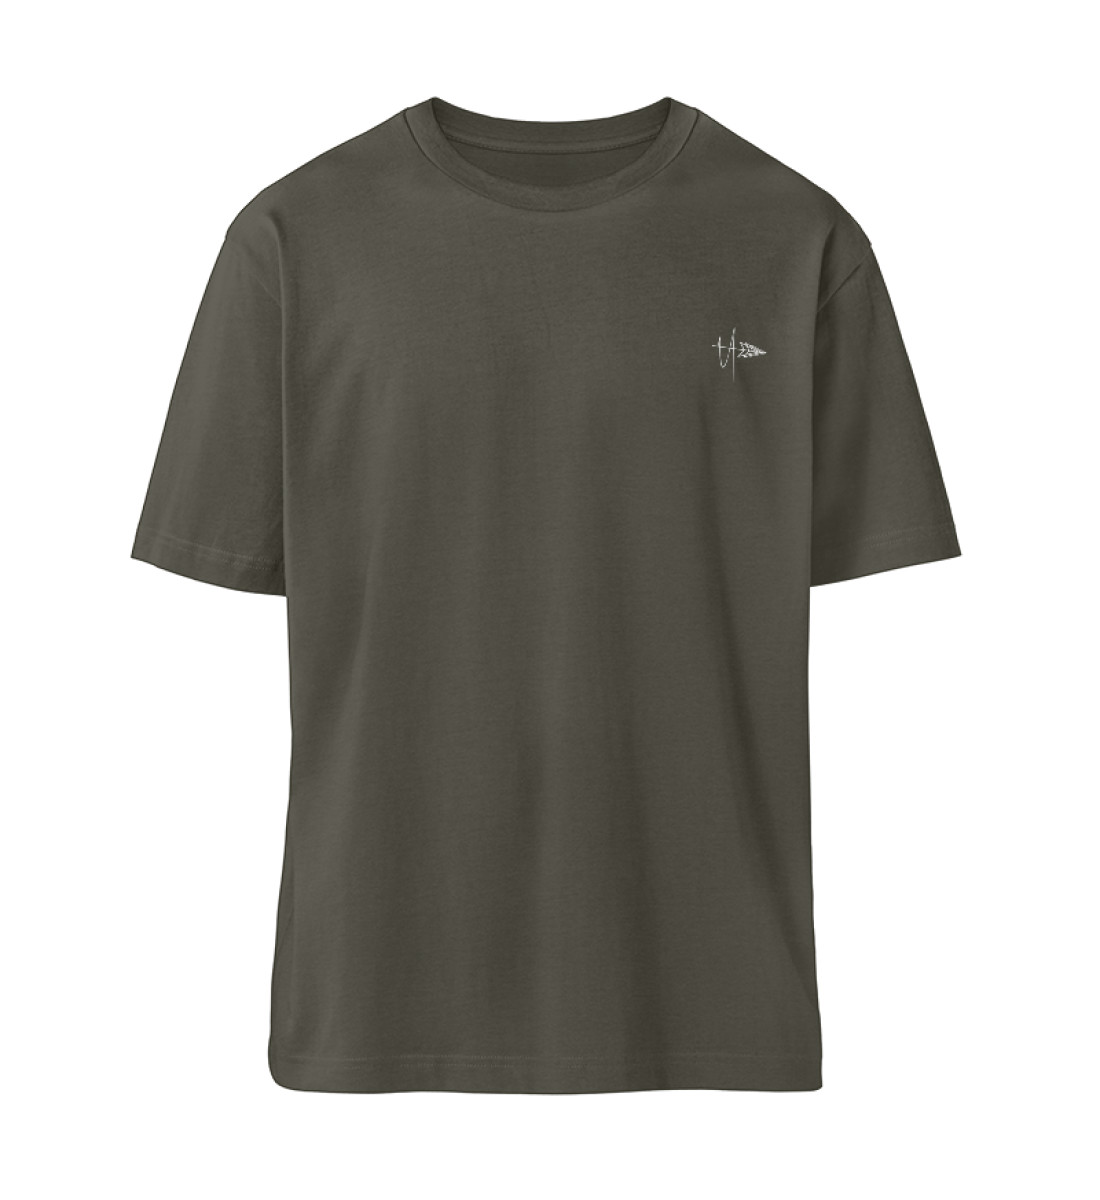 shirt // palm // white - Fuser Relaxed Shirt ST/ST-7072